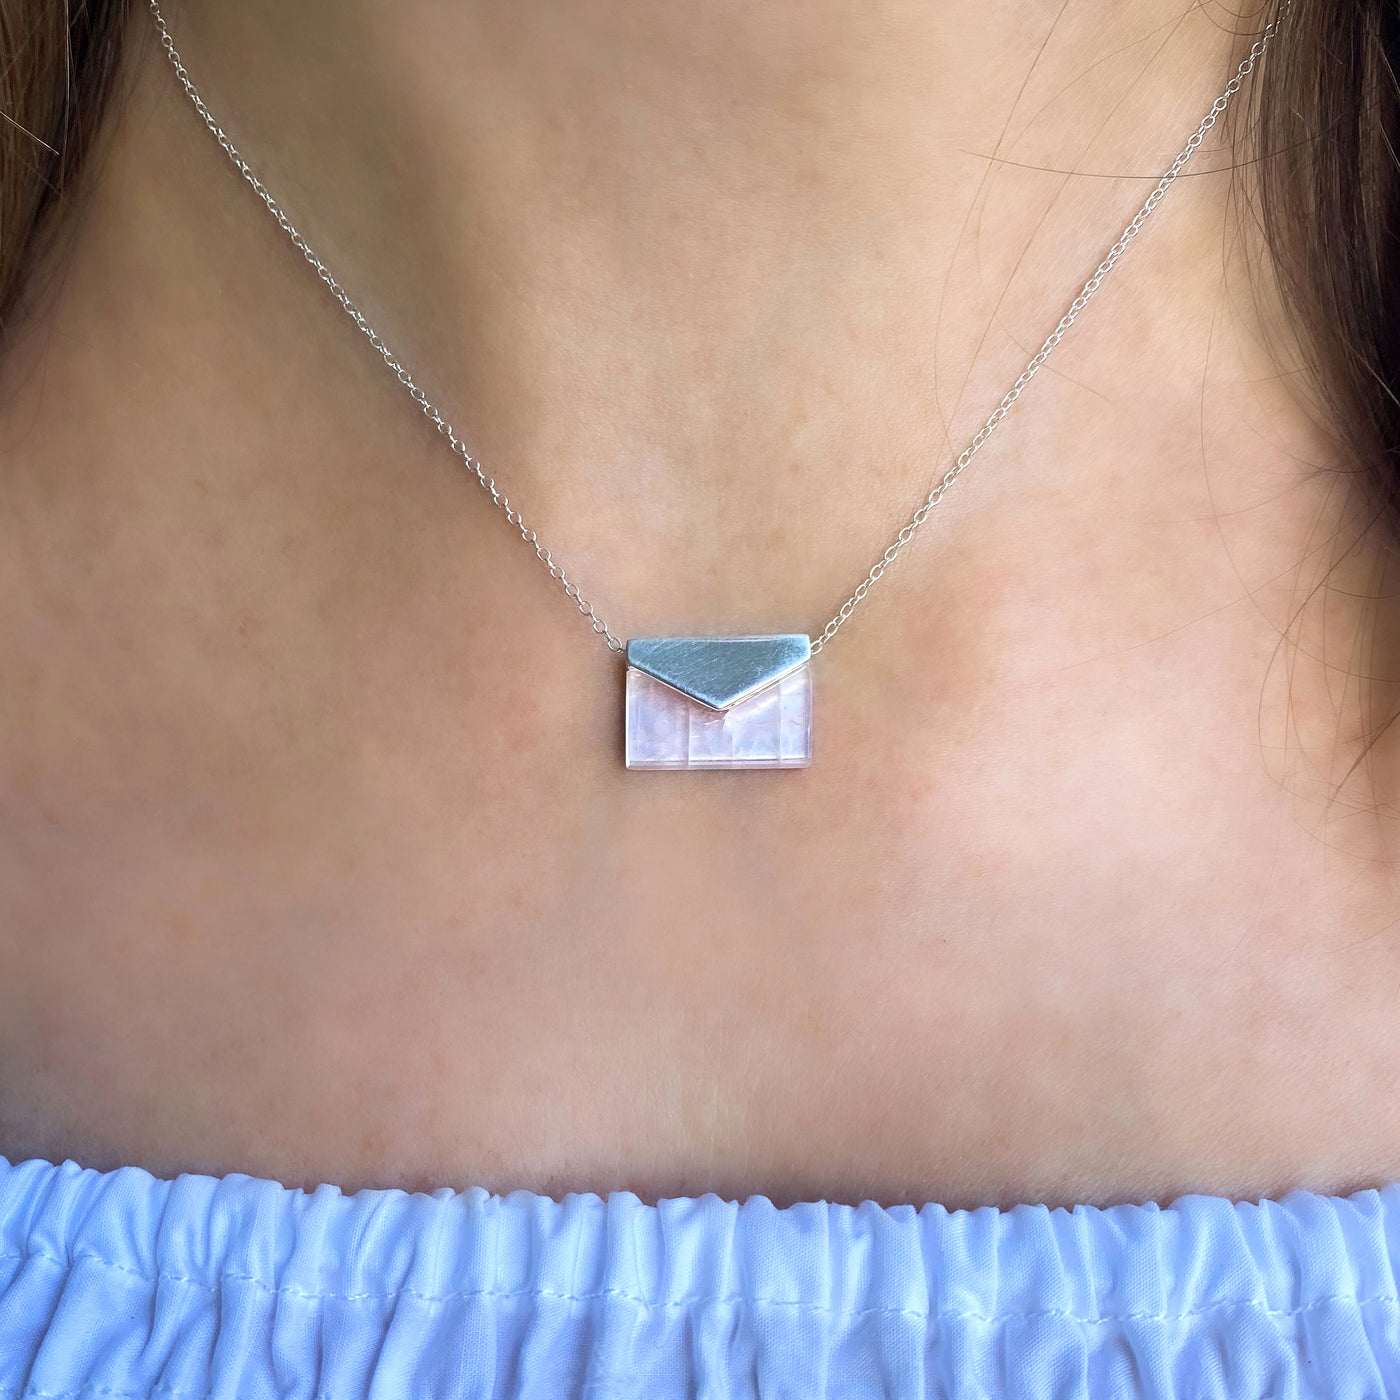 Silver envelope necklace with rose quartz